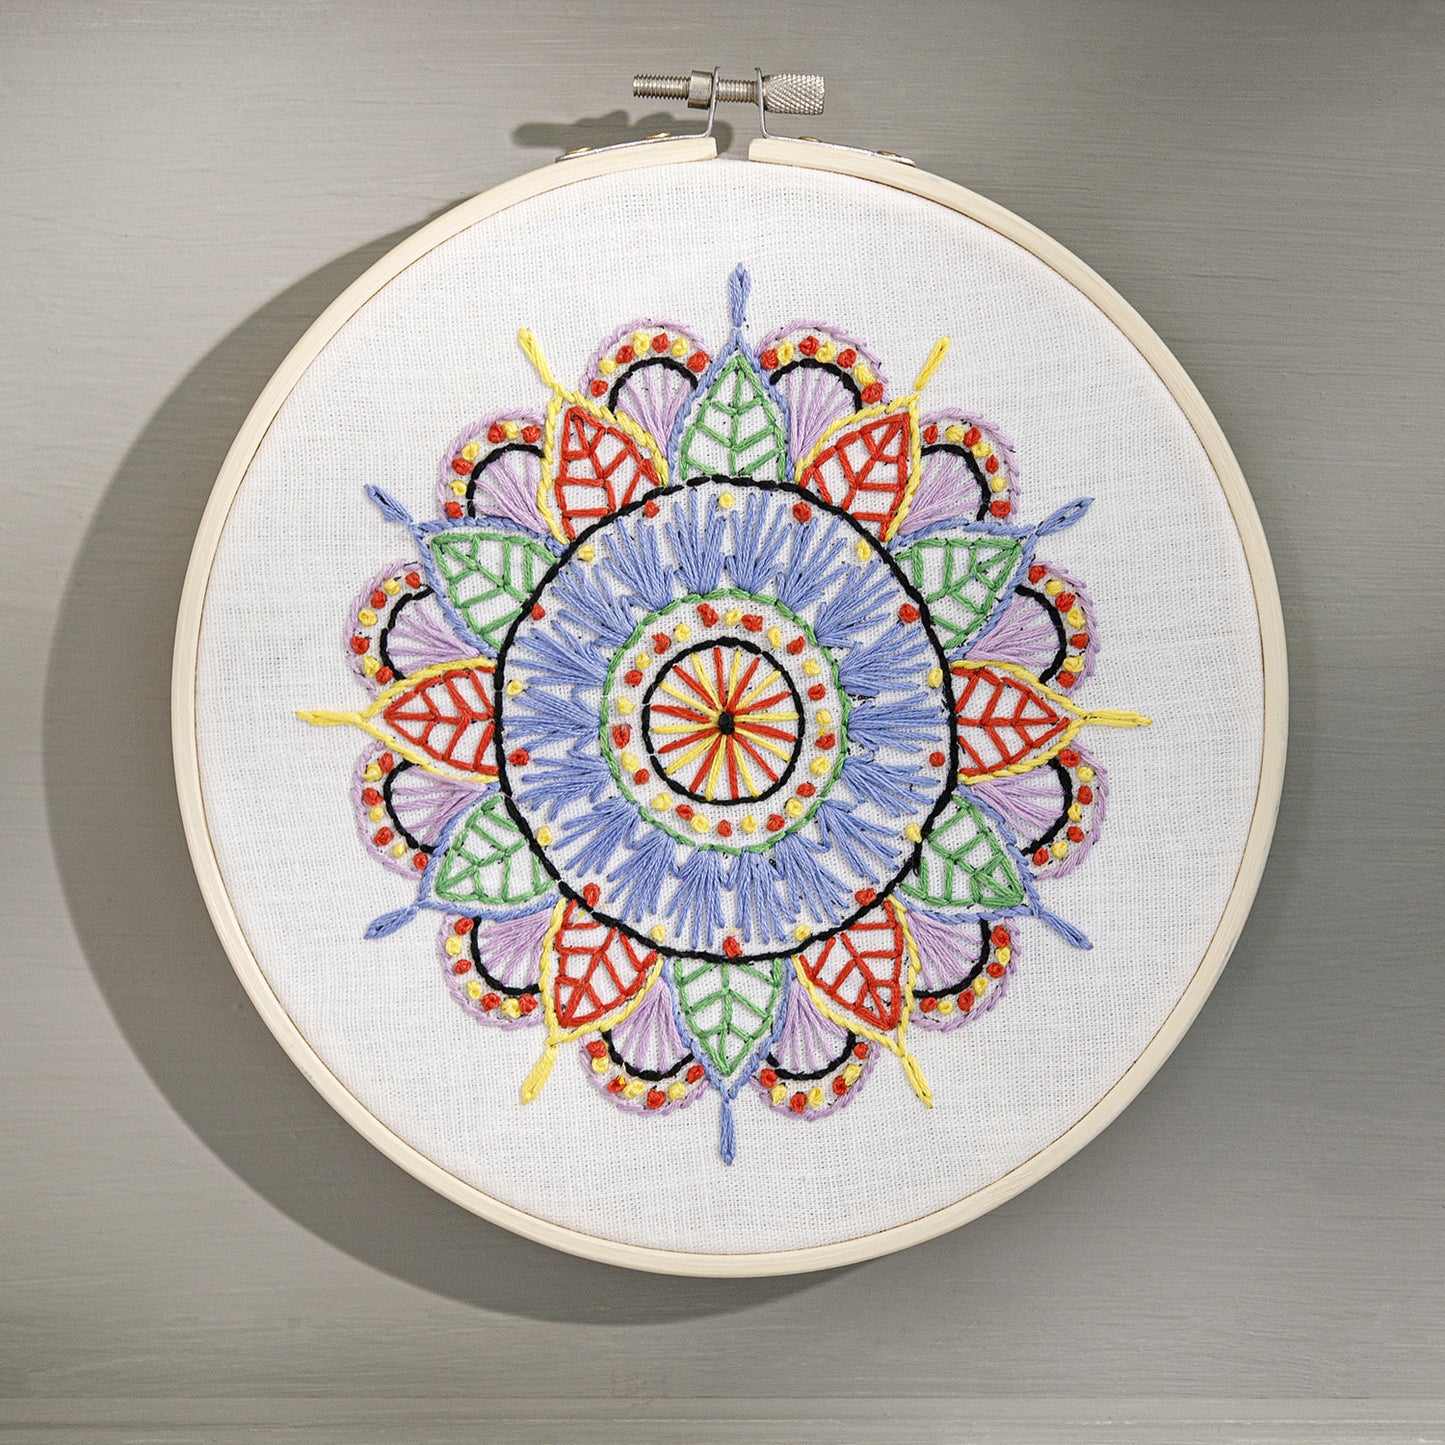 PREORDER - Learn Embroidery Stitch by Stitch with Missouri Star Alternative View #26